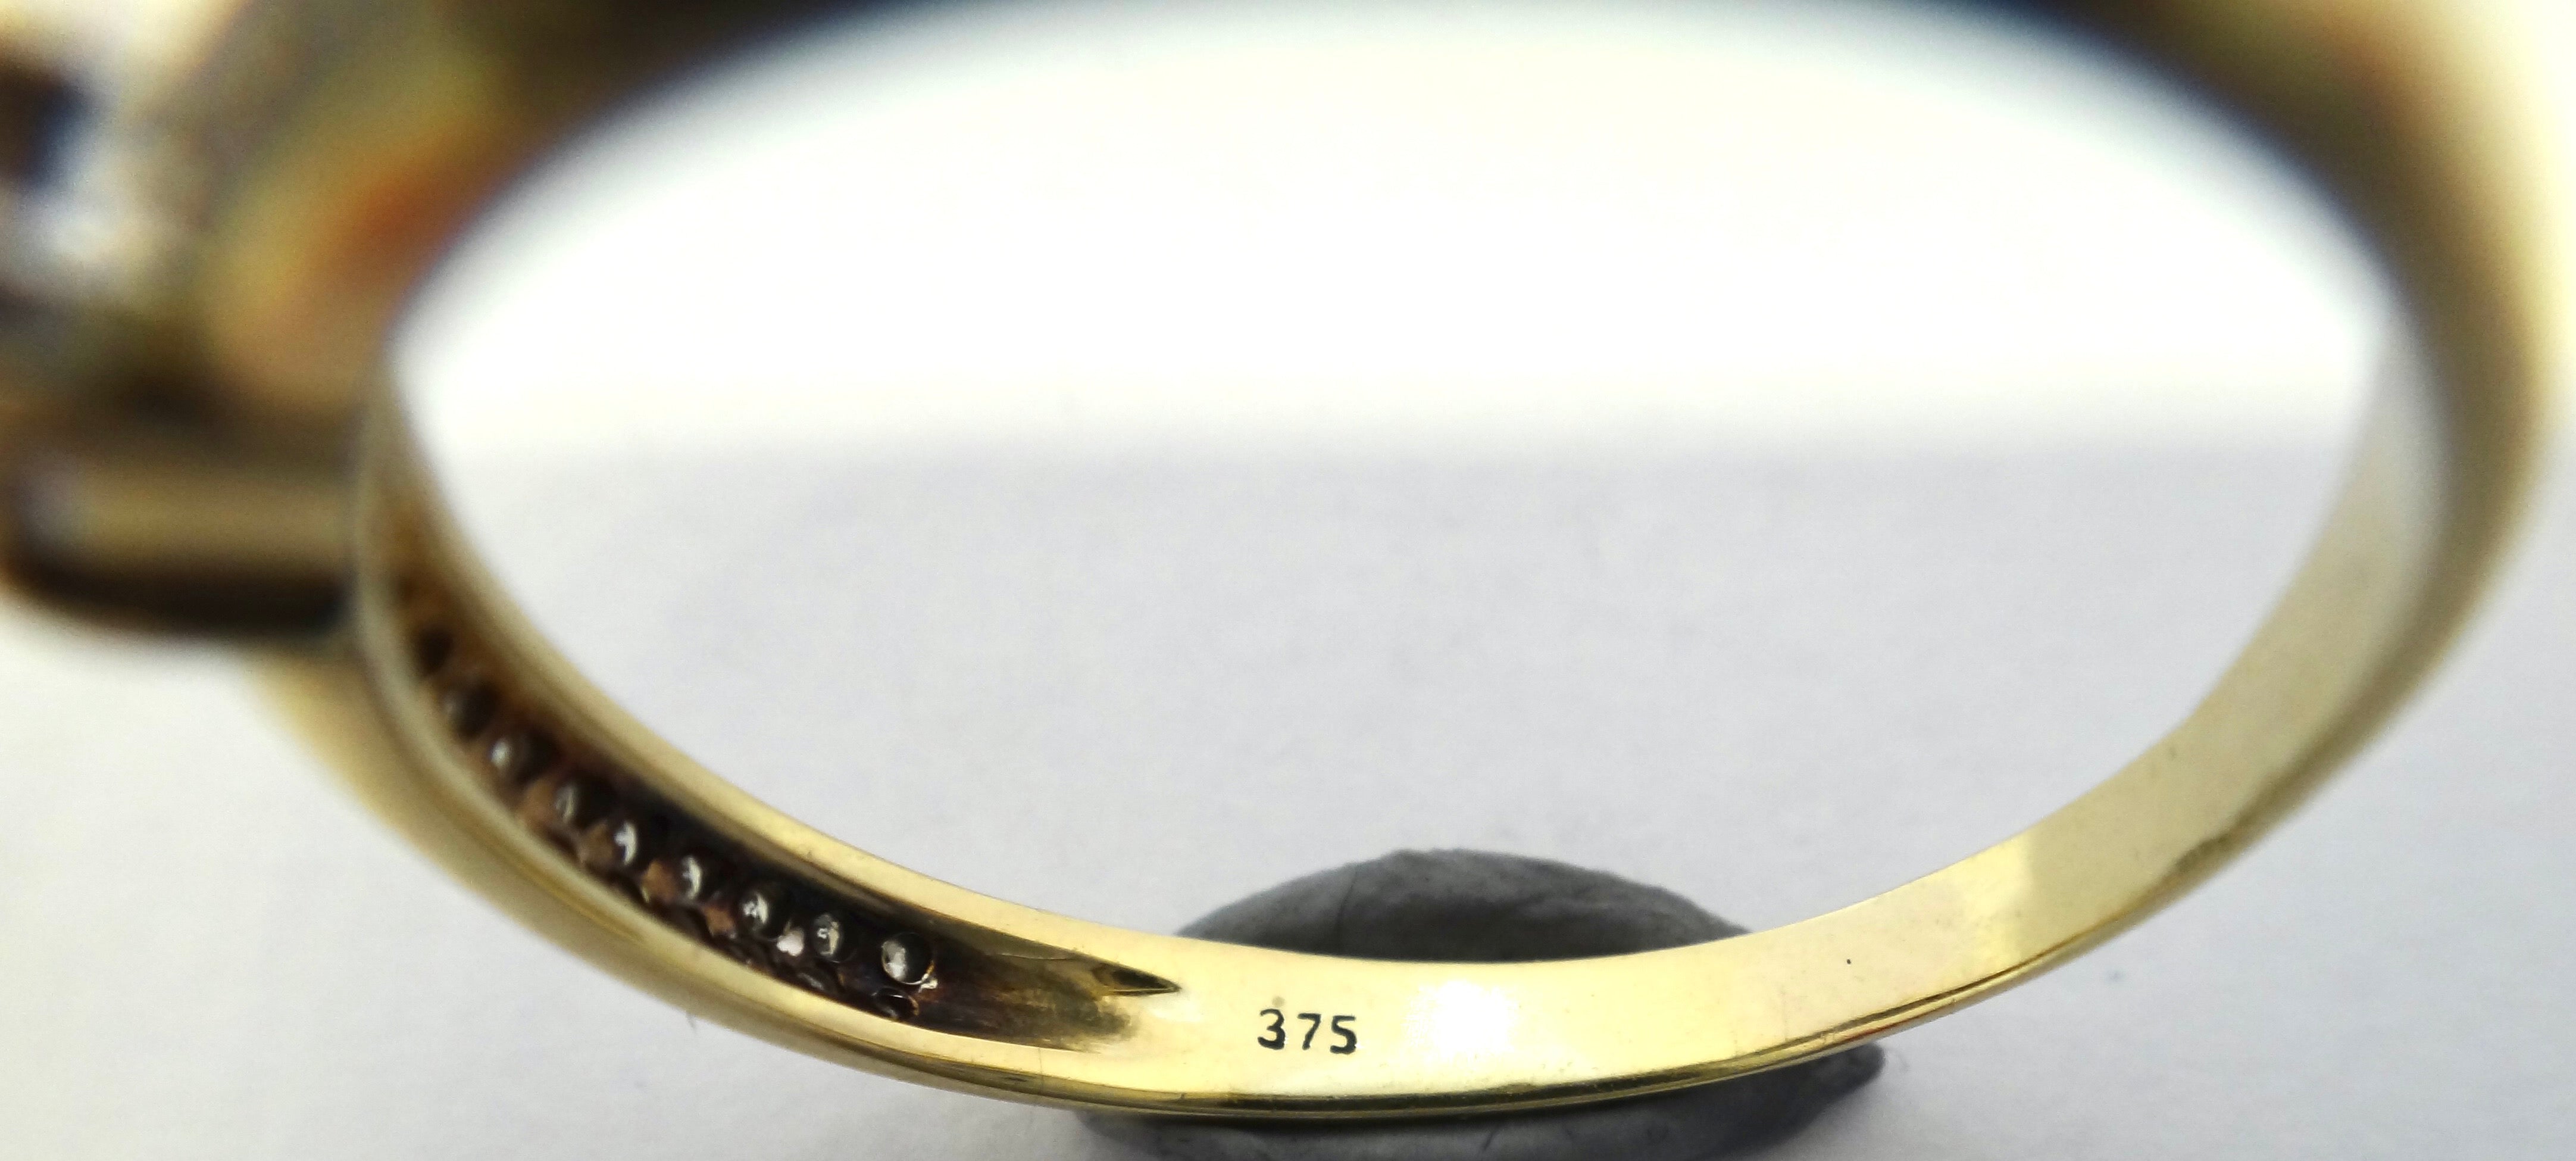 9CT Yellow GOLD & Brilliant Cut Diamond Ring